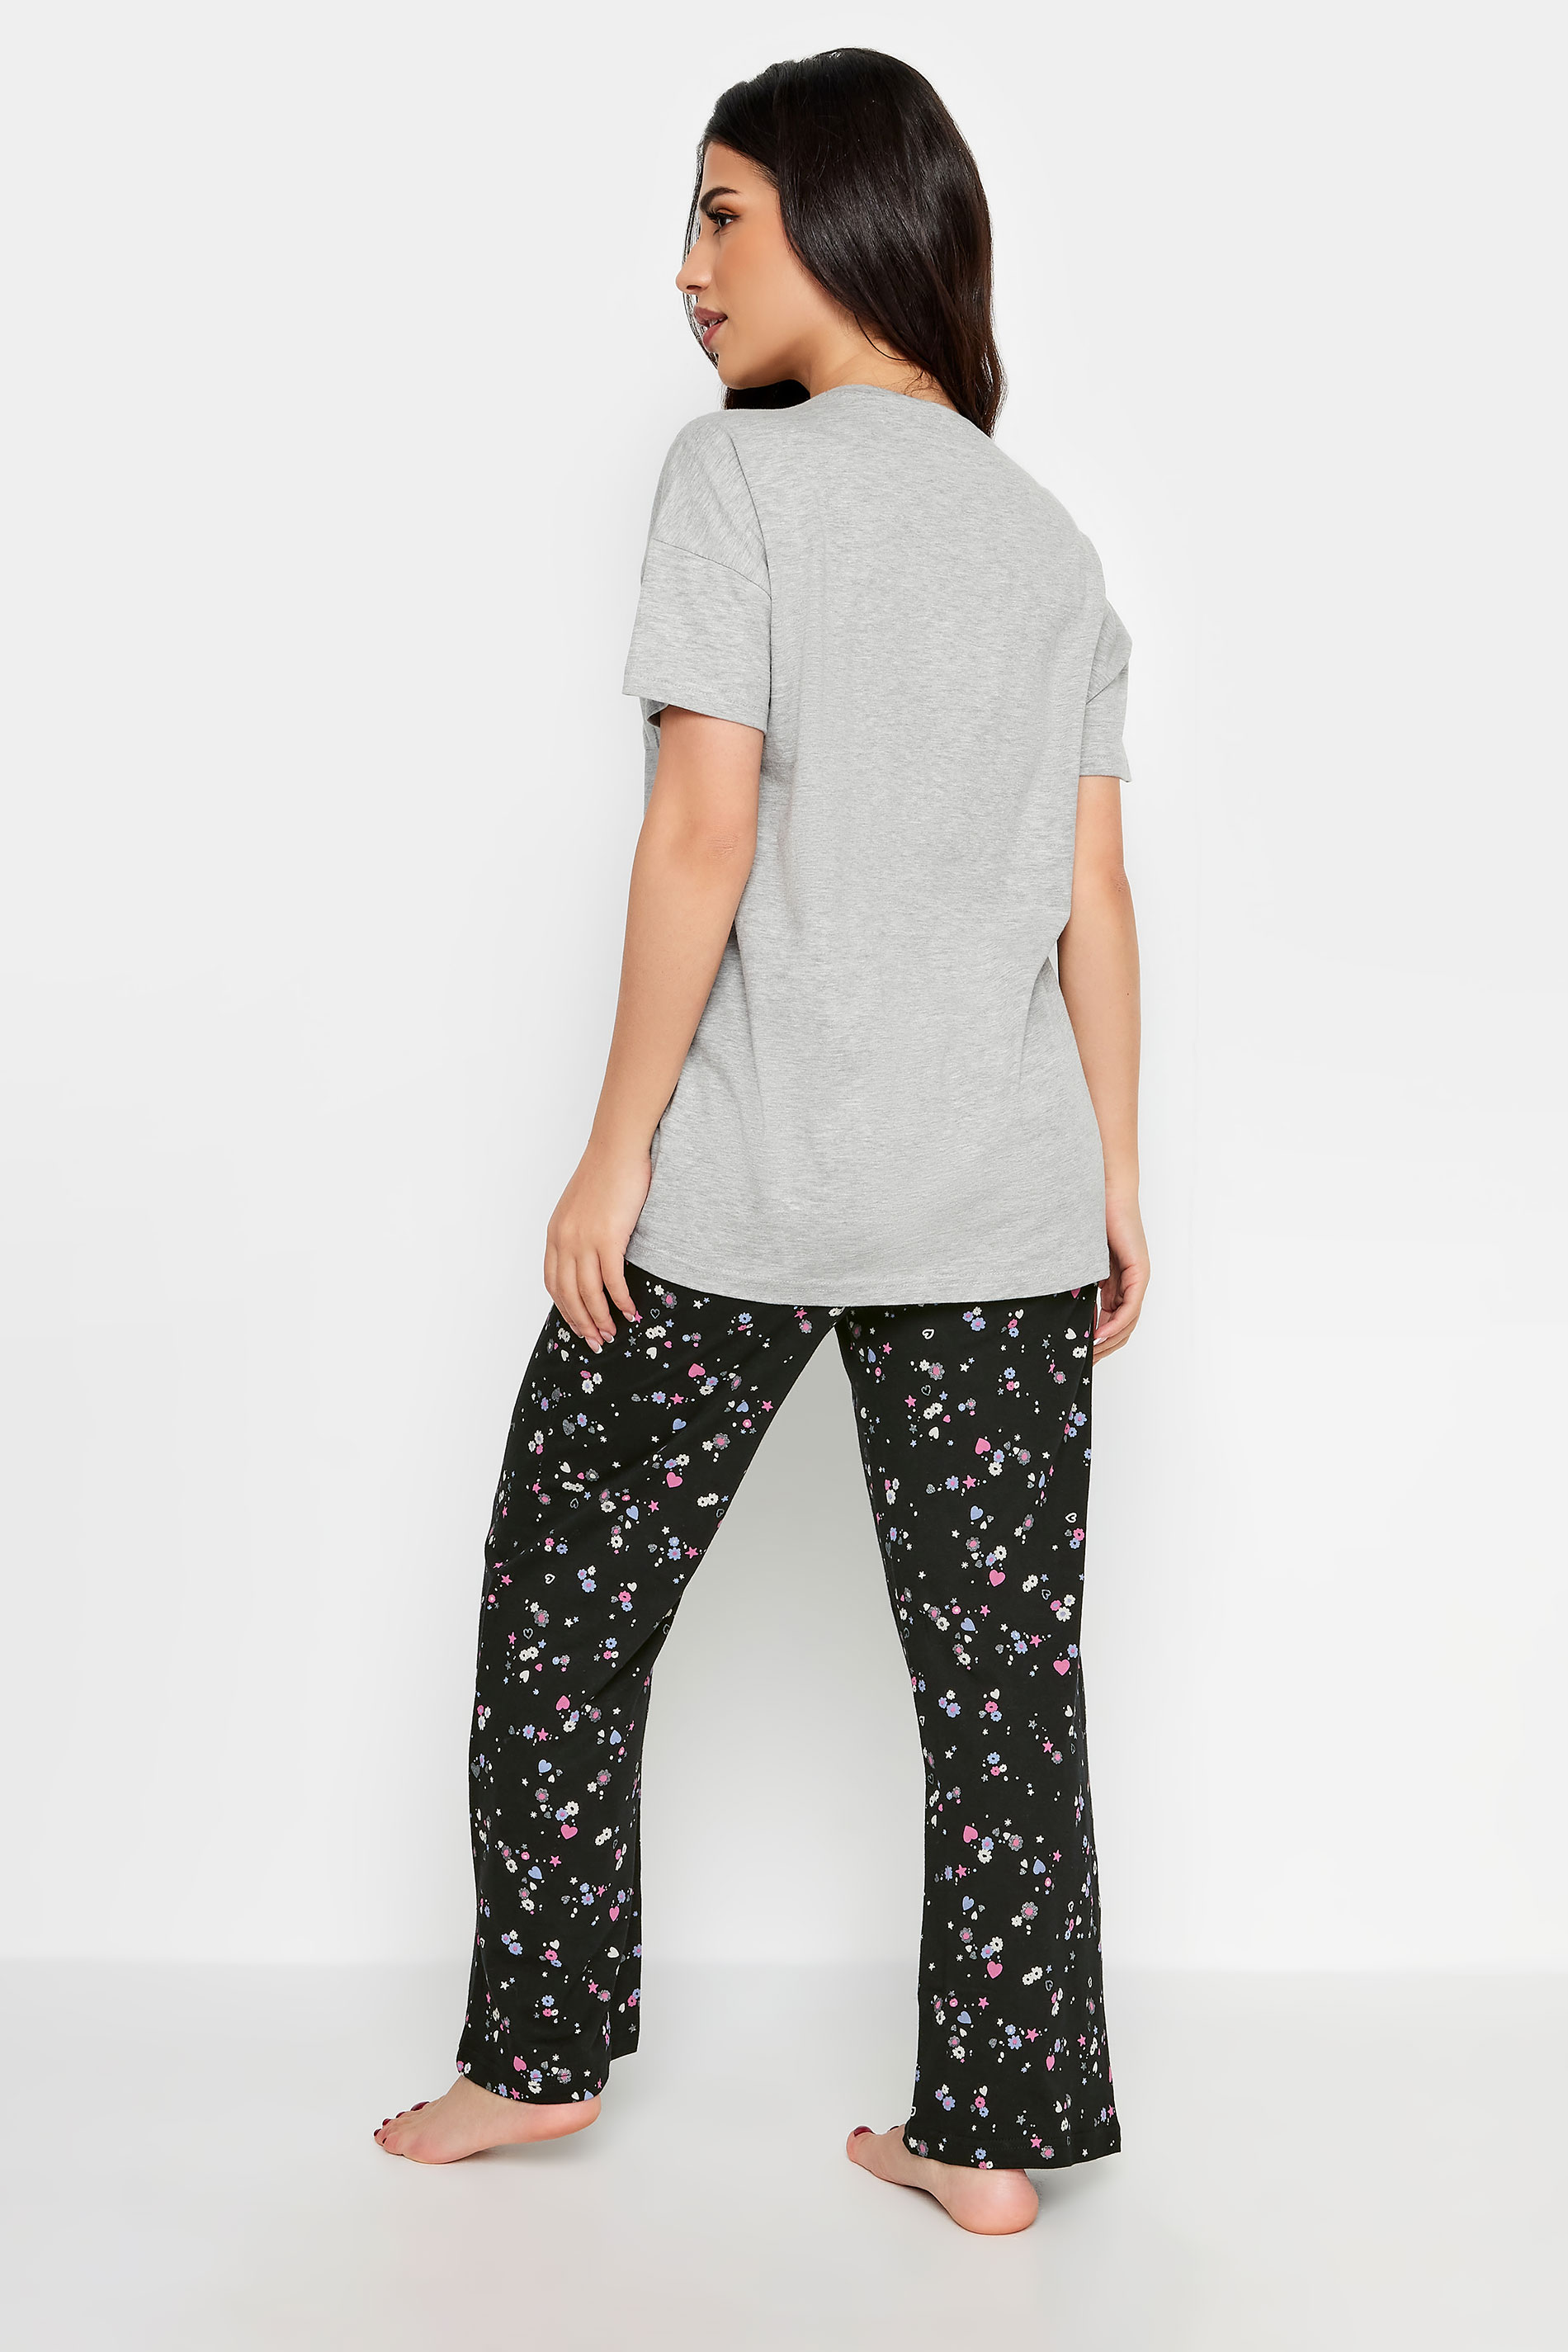 PixieGirl Petite Womens Grey Ditsy Floral Print Wide Leg Pyjama Set | PixieGirl 3